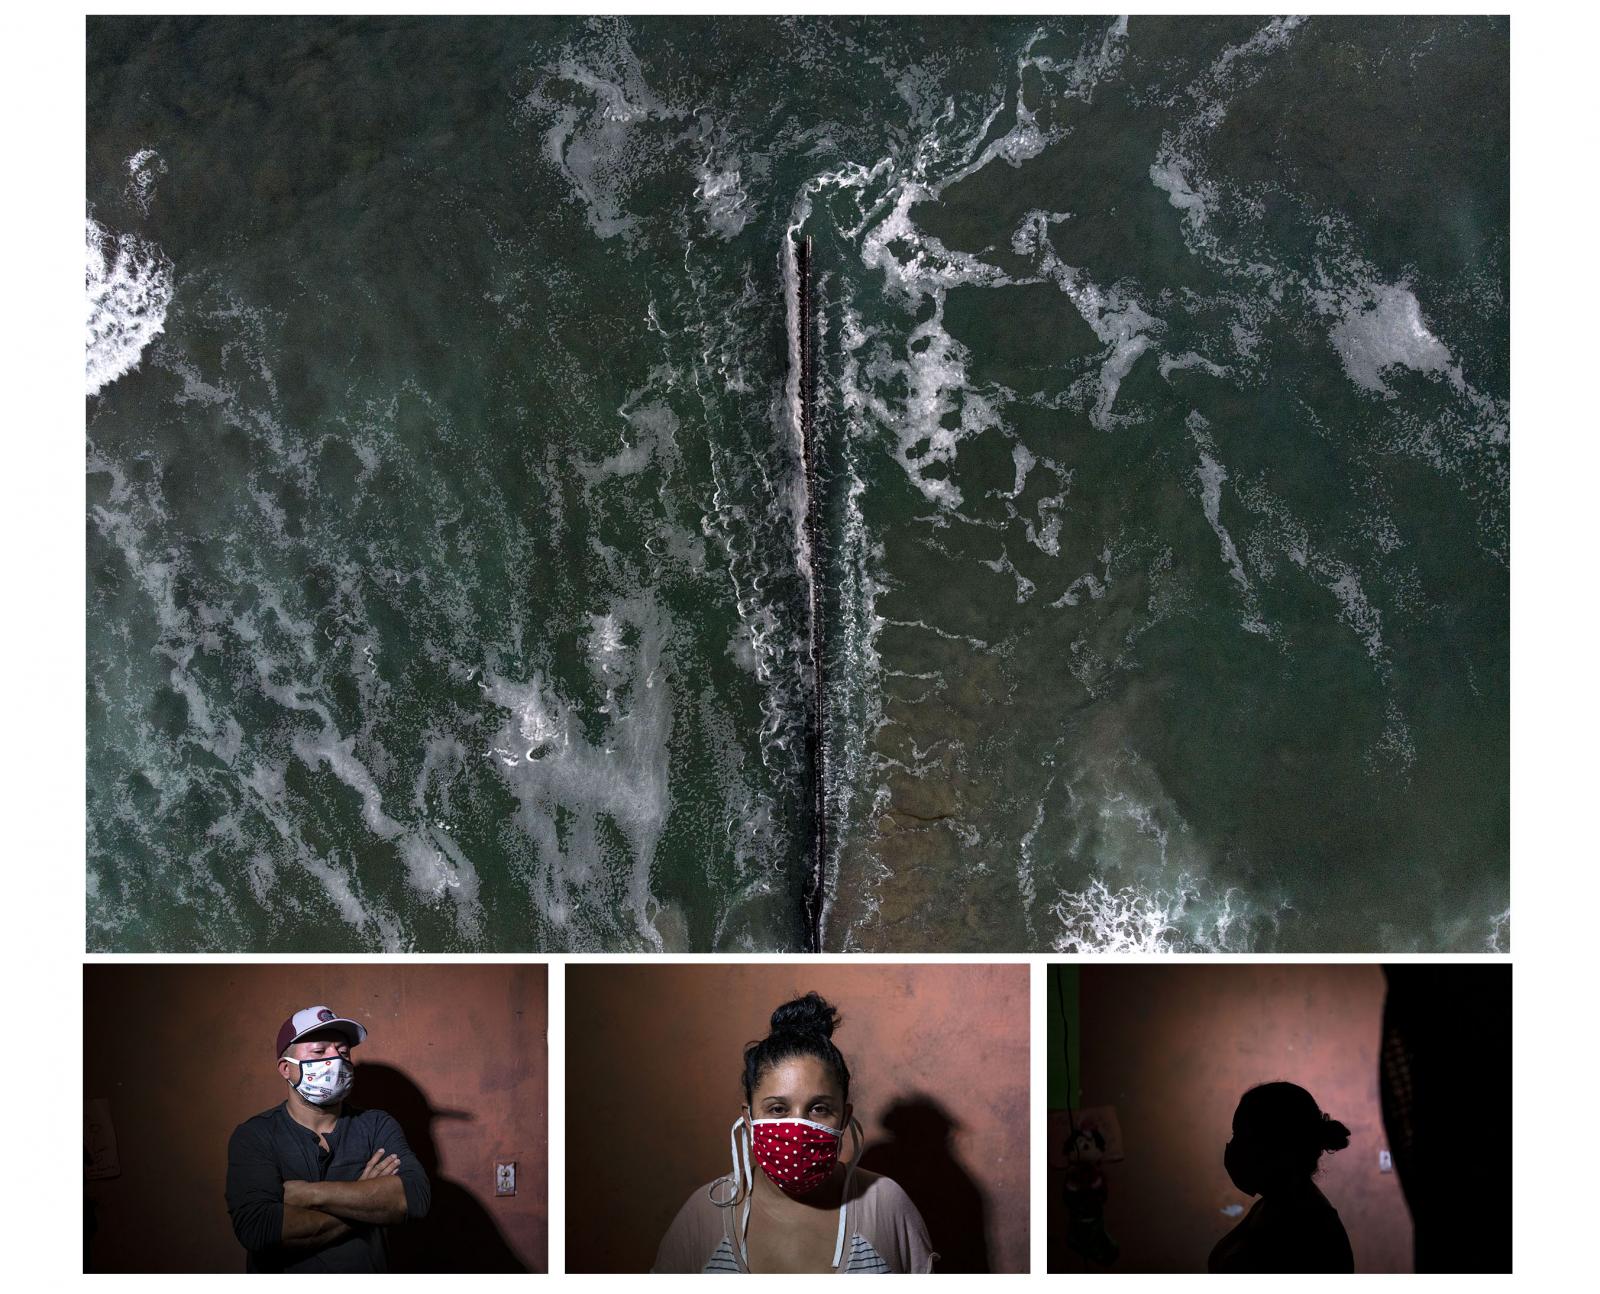 IMAGENES / IMAGES - Guillermo Arias / Muro Pandémico A medida que...